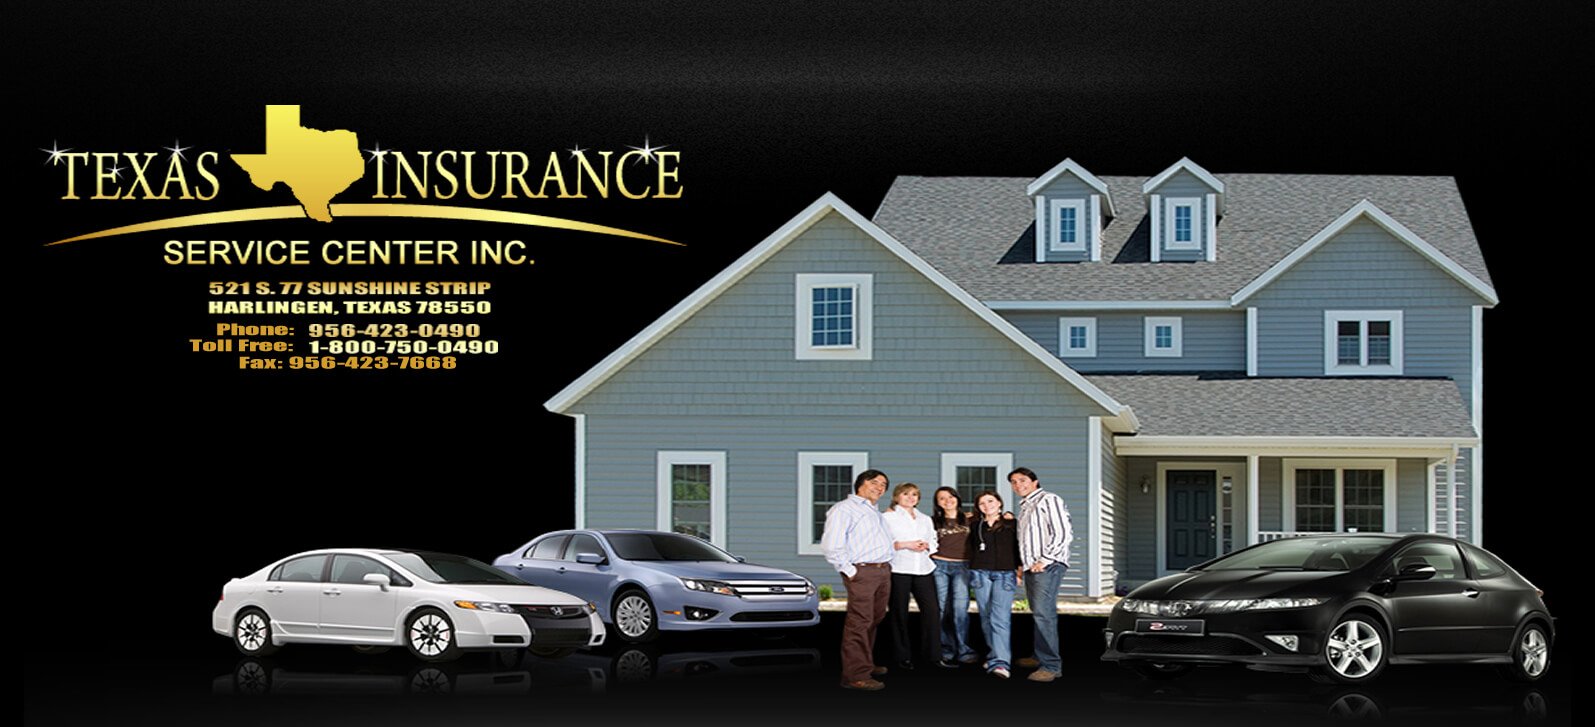 Texas Insurance Service Center Inc.| Insurance Services Harlingen TX